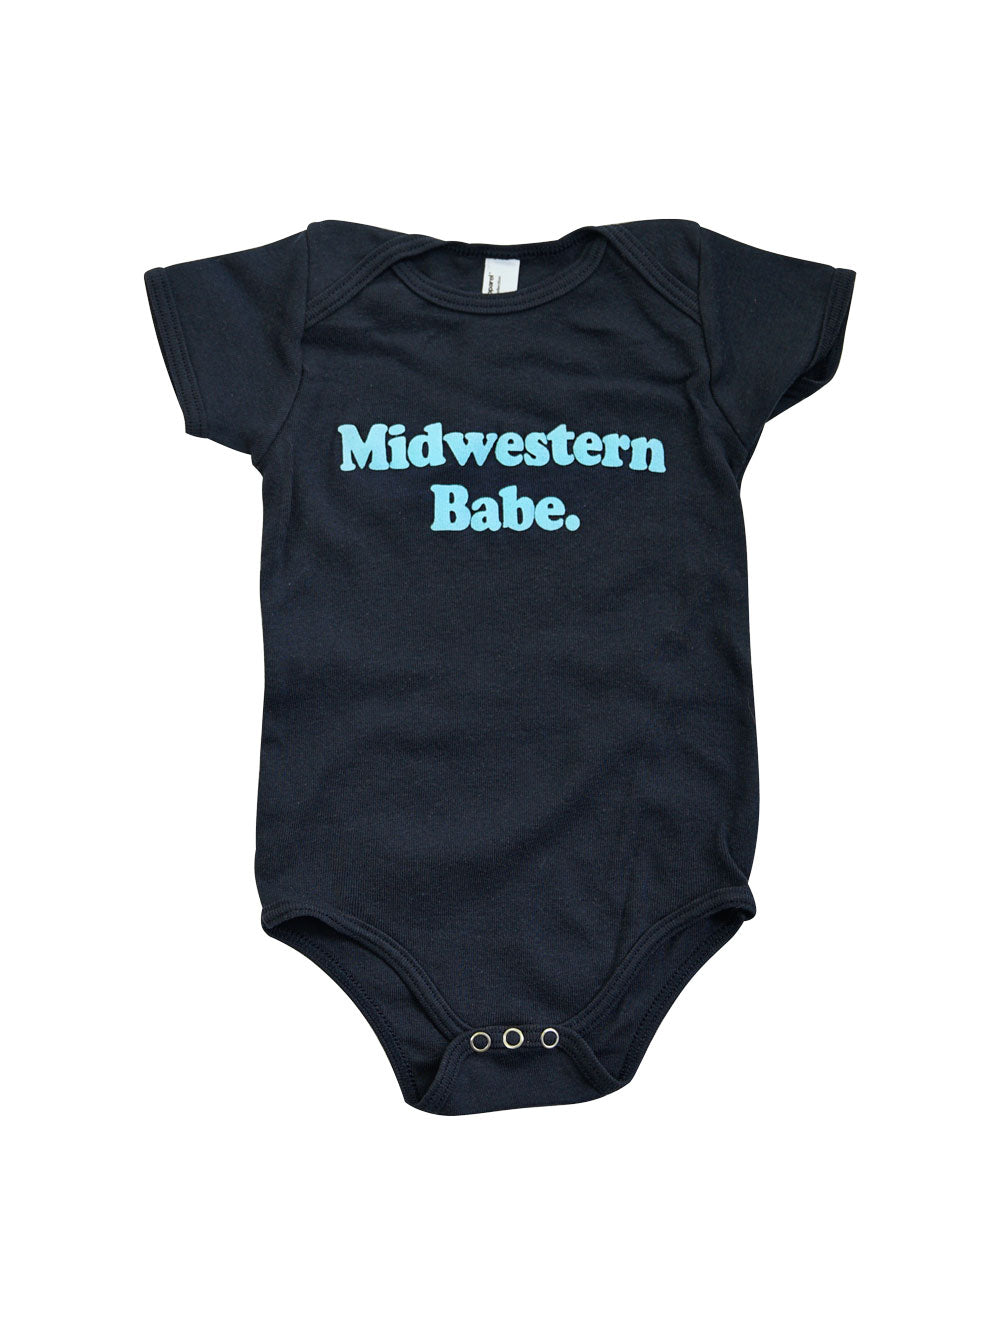 Midwestern Babe navy infant bodysuit